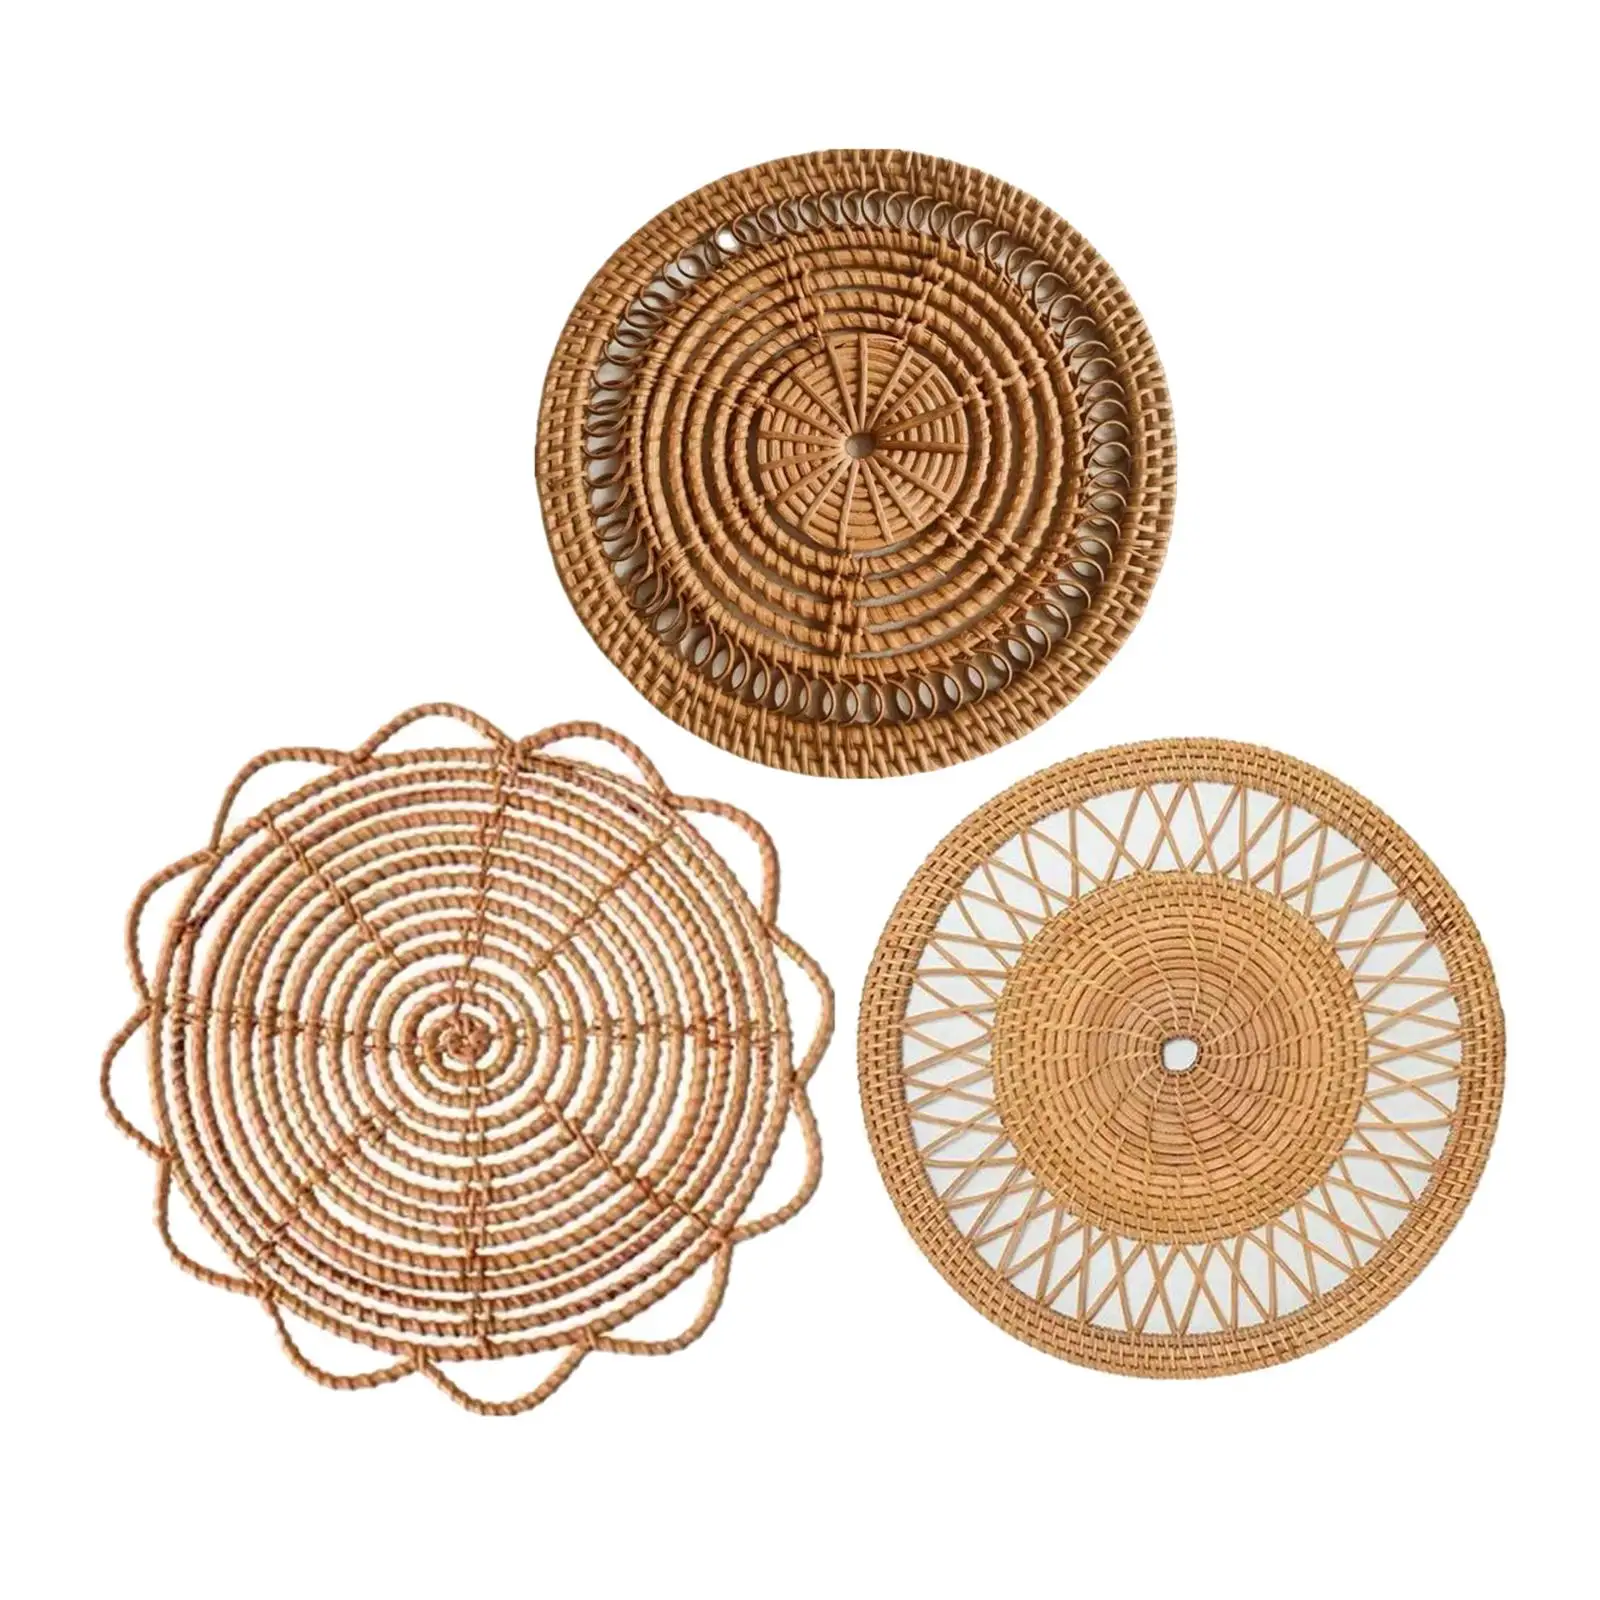 Handwoven Wall Basket Decor Round Boho Decor Rattan for Living Room Bed Room